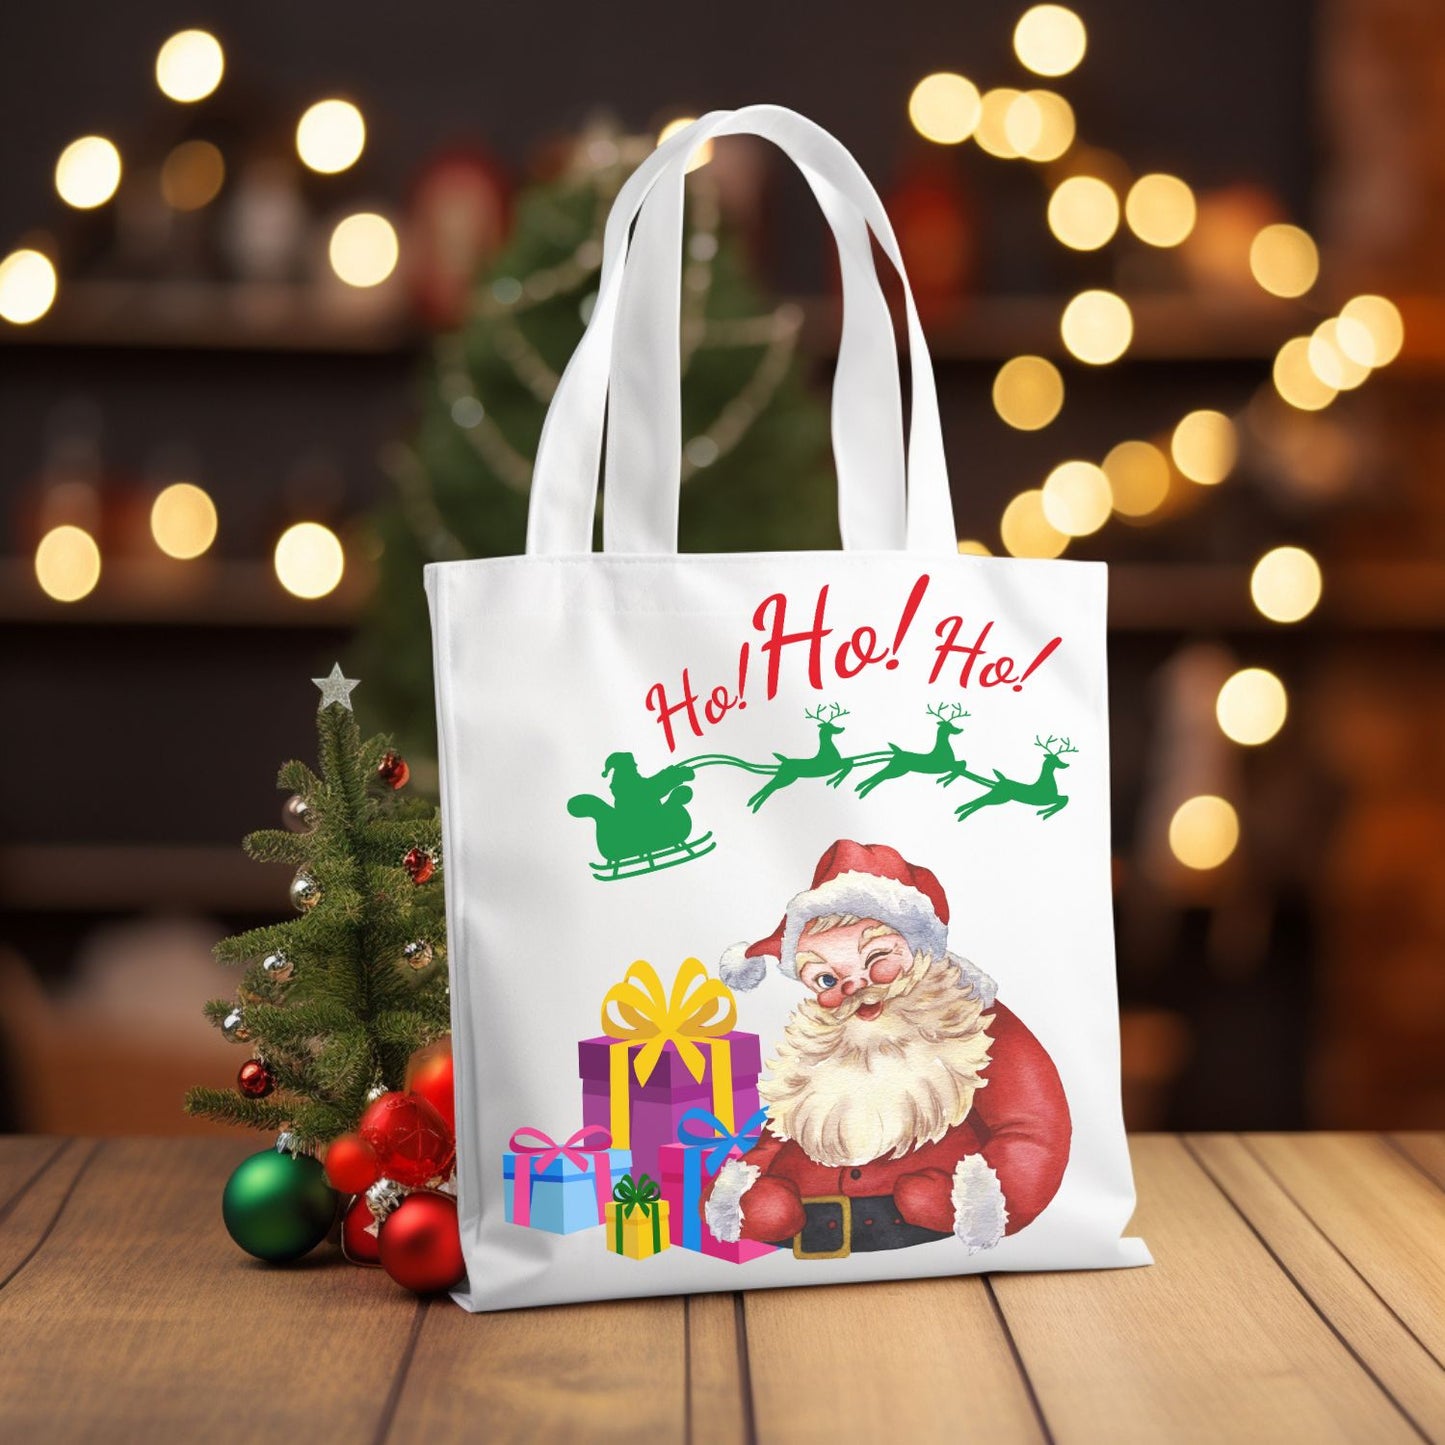 Ho Ho Ho Christmas Tote Bag | Holiday Tote Bag - Santa Claus HoHoHo Tote Accessories   